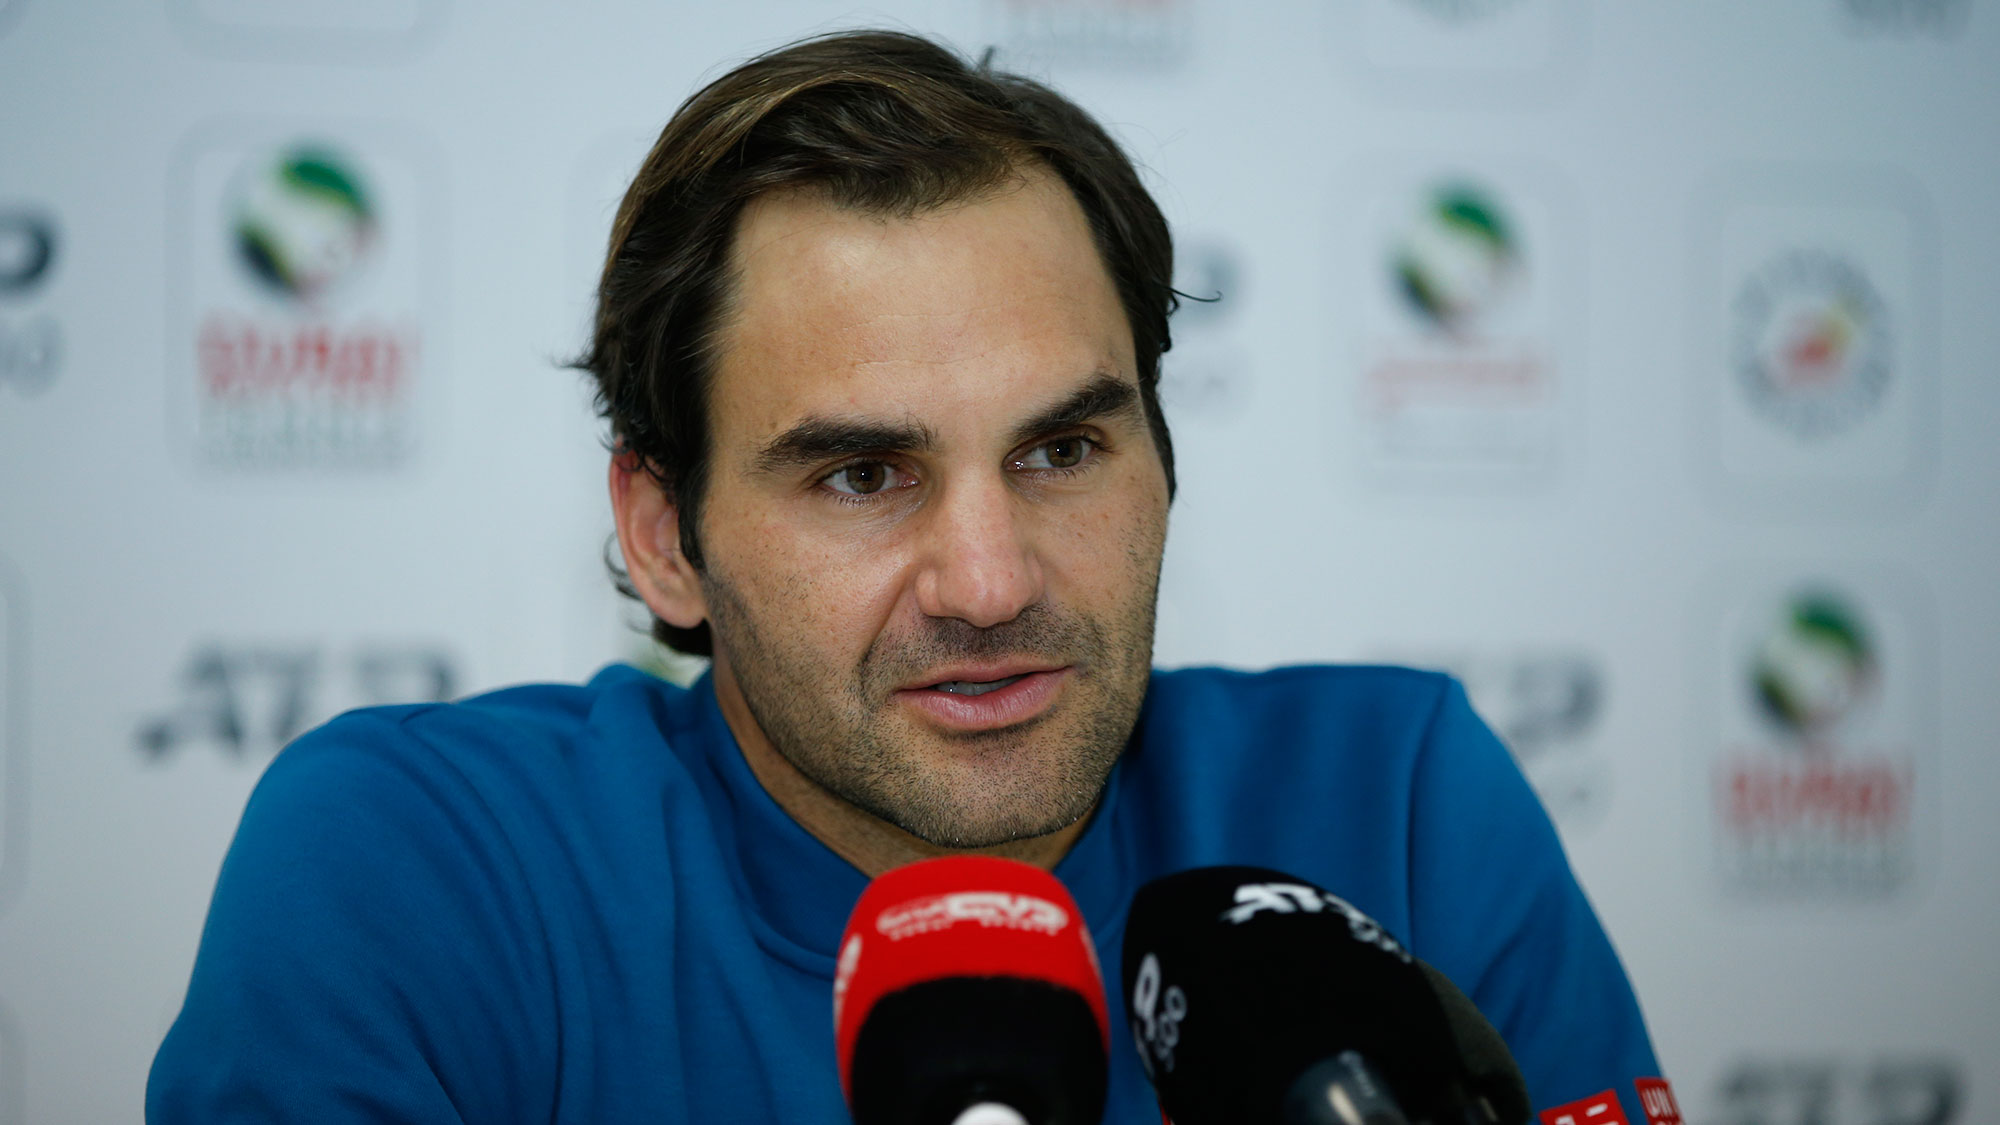 Roger Federer On Bencic's Dubai Title: 